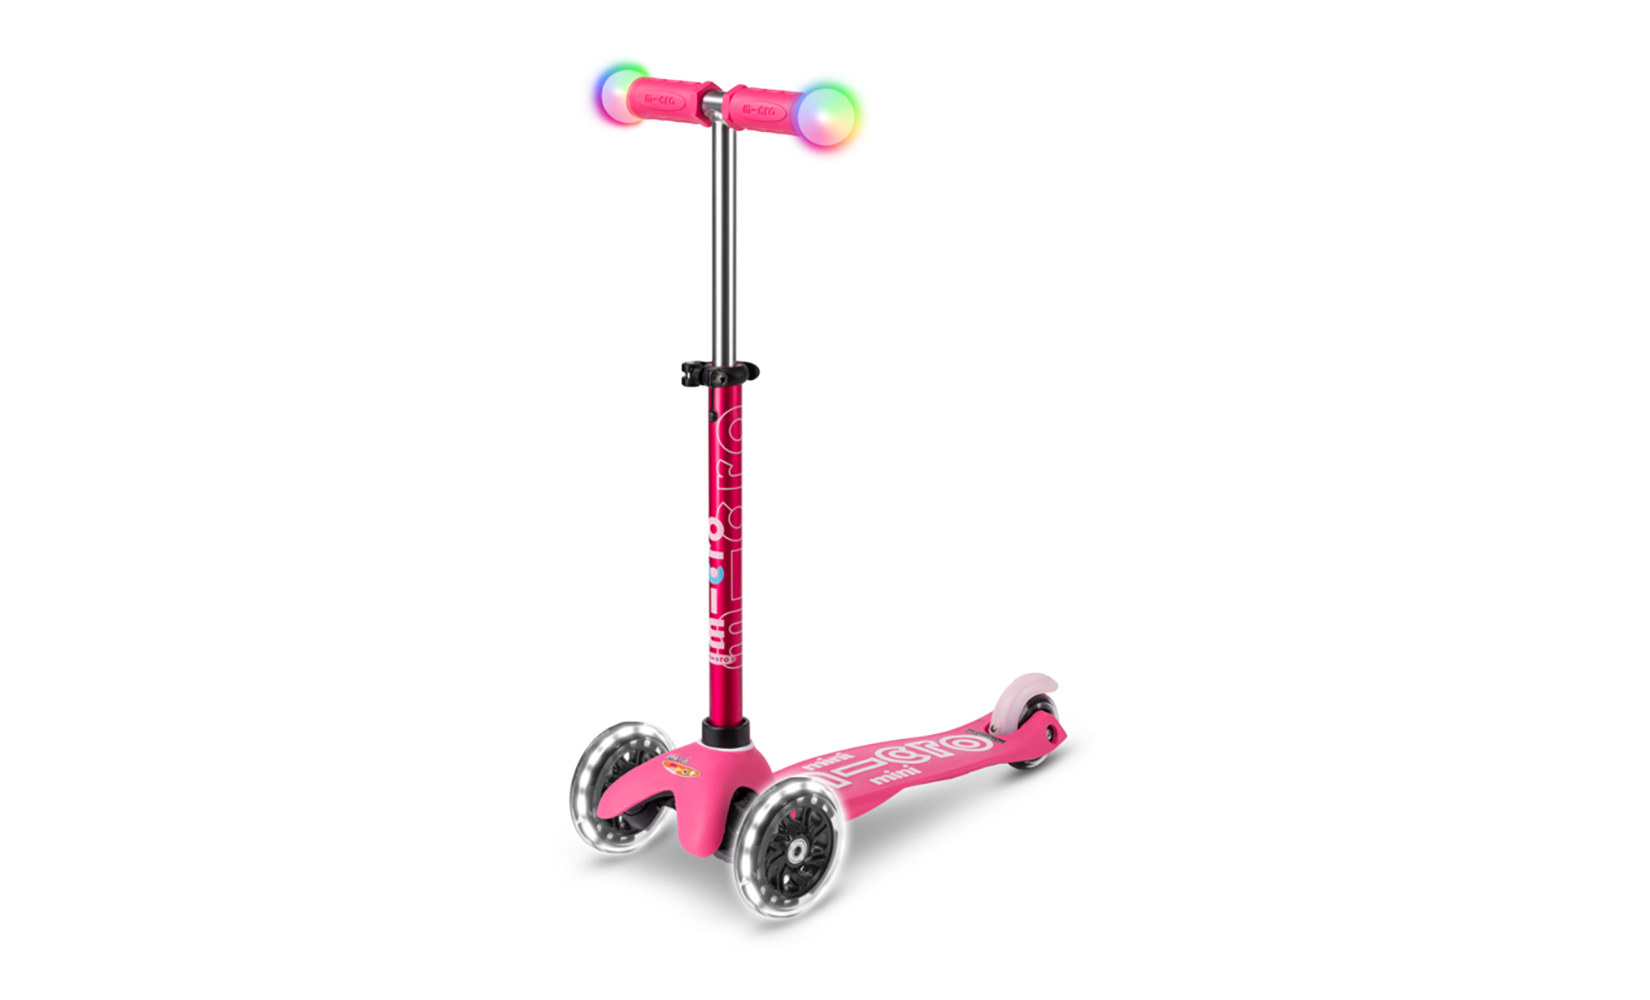 Самокат Micro Mini Deluxe Magic LED 2021 Розовый MMD13 женский велосипед stinger liberty evo год 2021 розовый ростовка 20 5